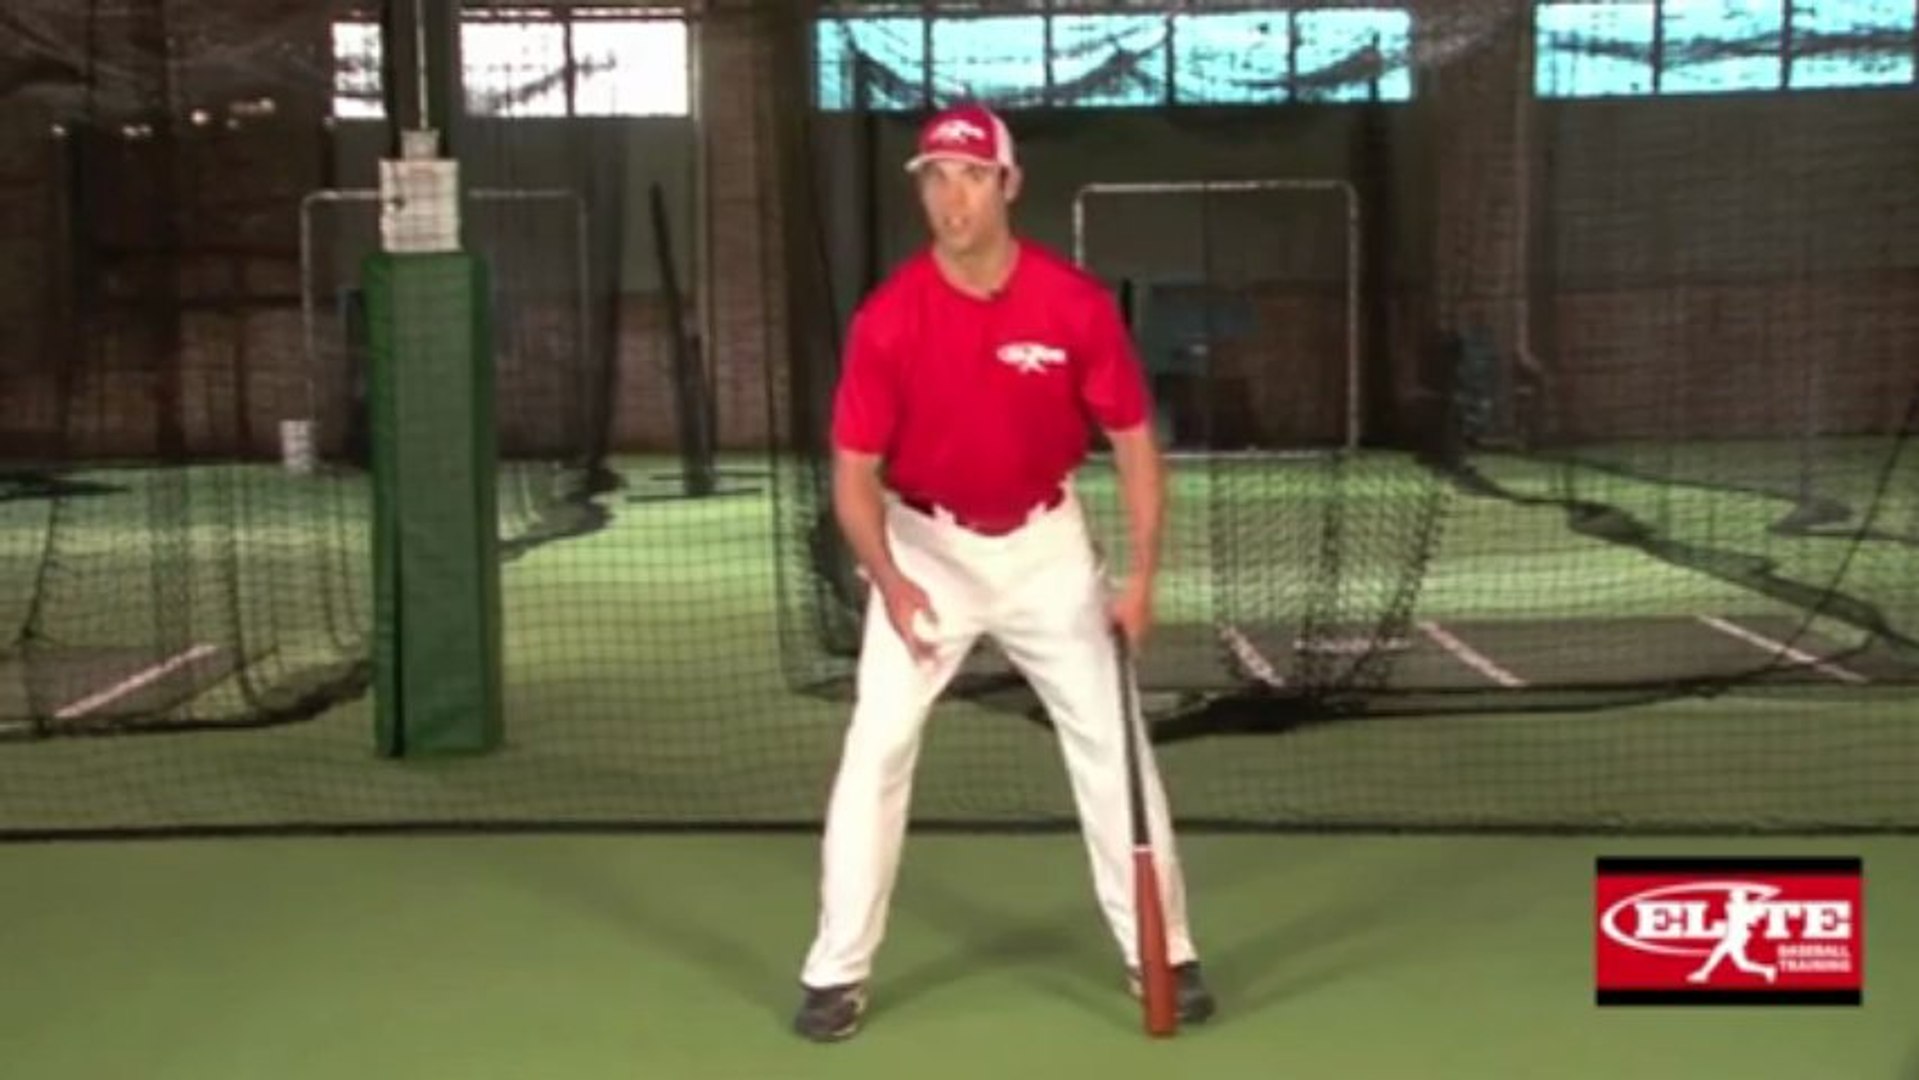 Youth Baseball Drills - Elite Baseball Training Tip - Negative Move